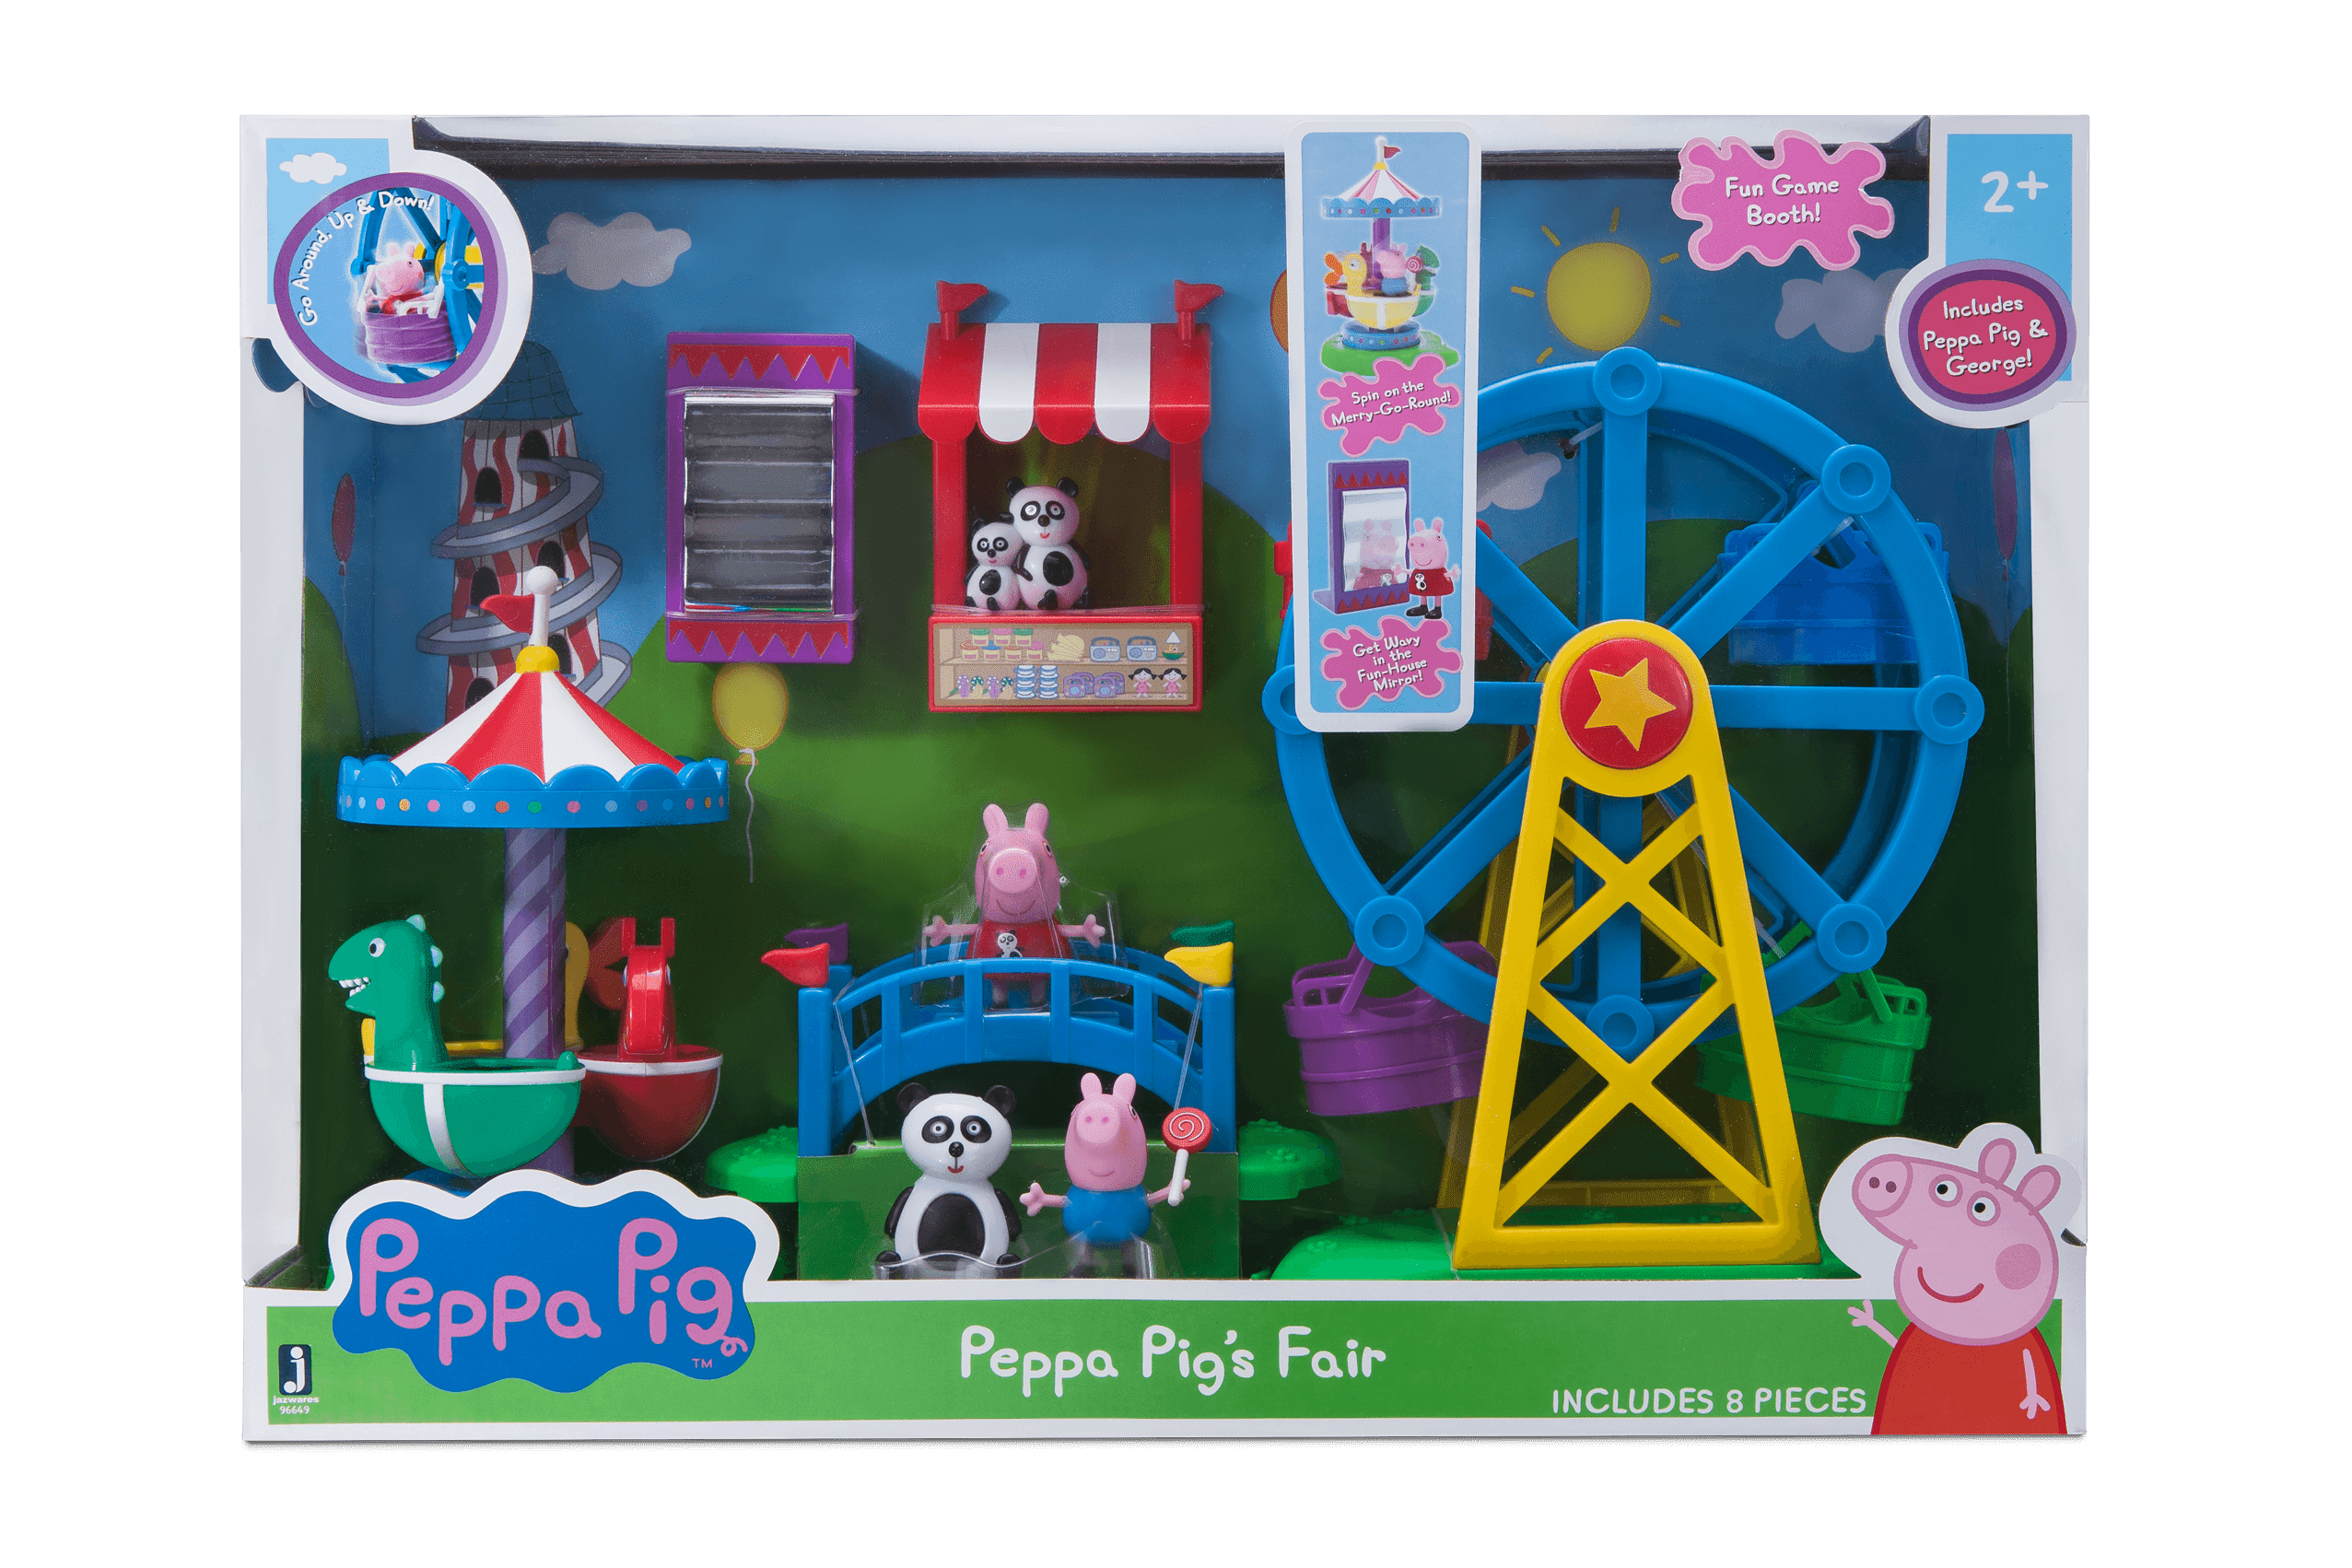 8 pieces Peppa's Pig Fun Fair Playset with Peppa Pig & George Figures 